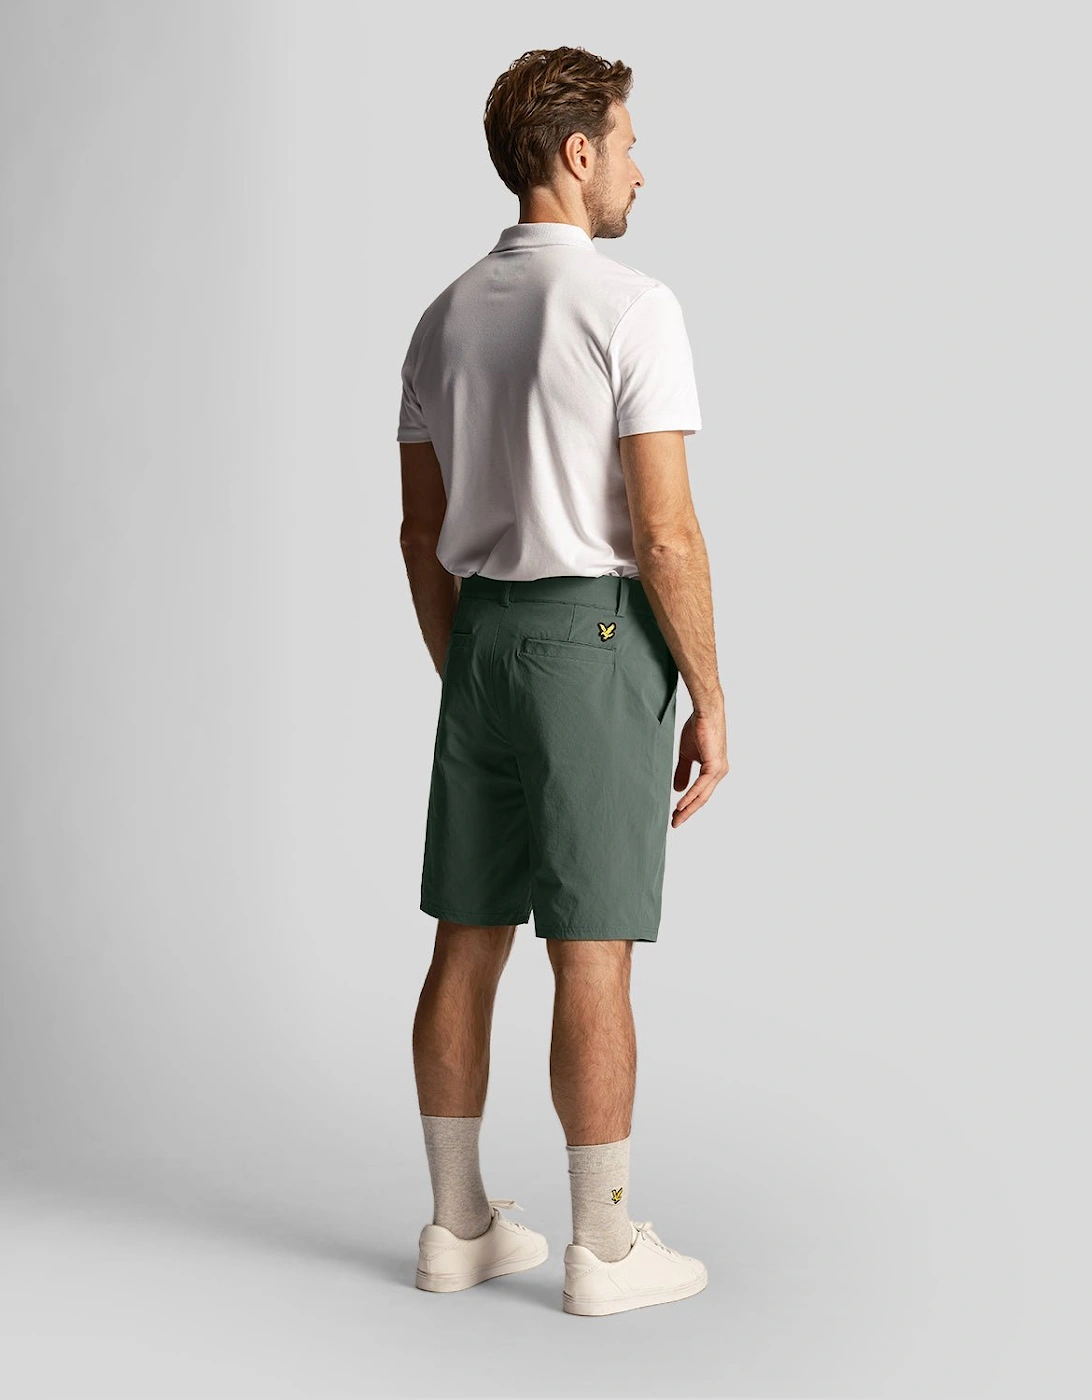 Golf Technical Shorts